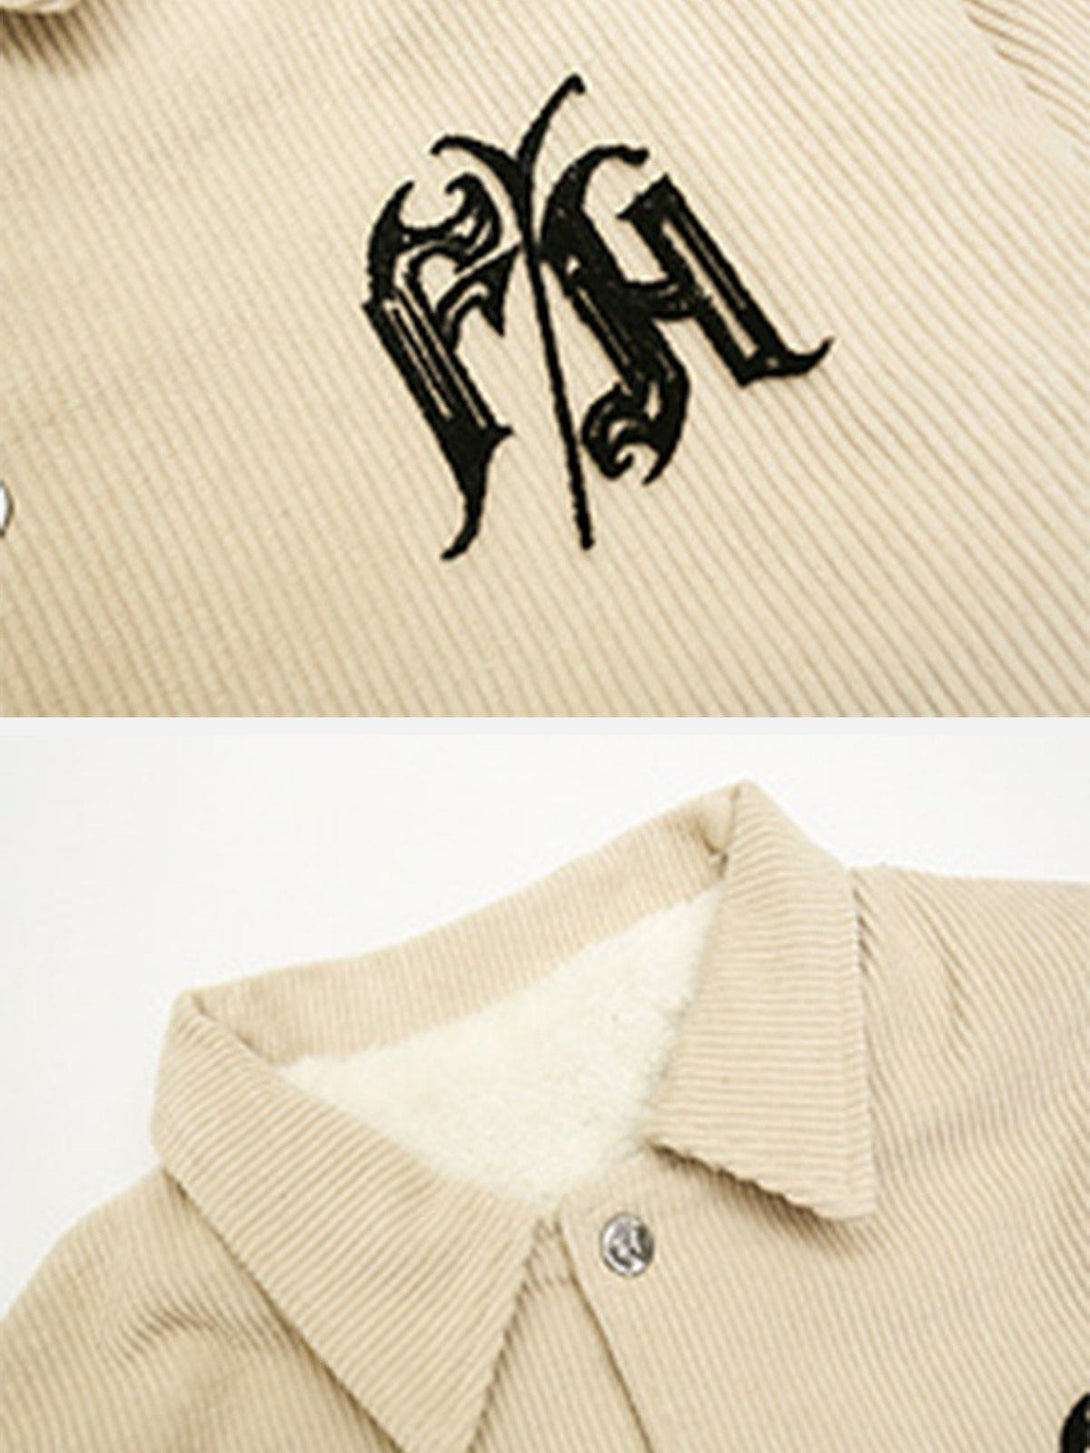 Majesda® - Gothic Monogram Embroidered Corduroy Winter Coat outfit ideas streetwear fashion